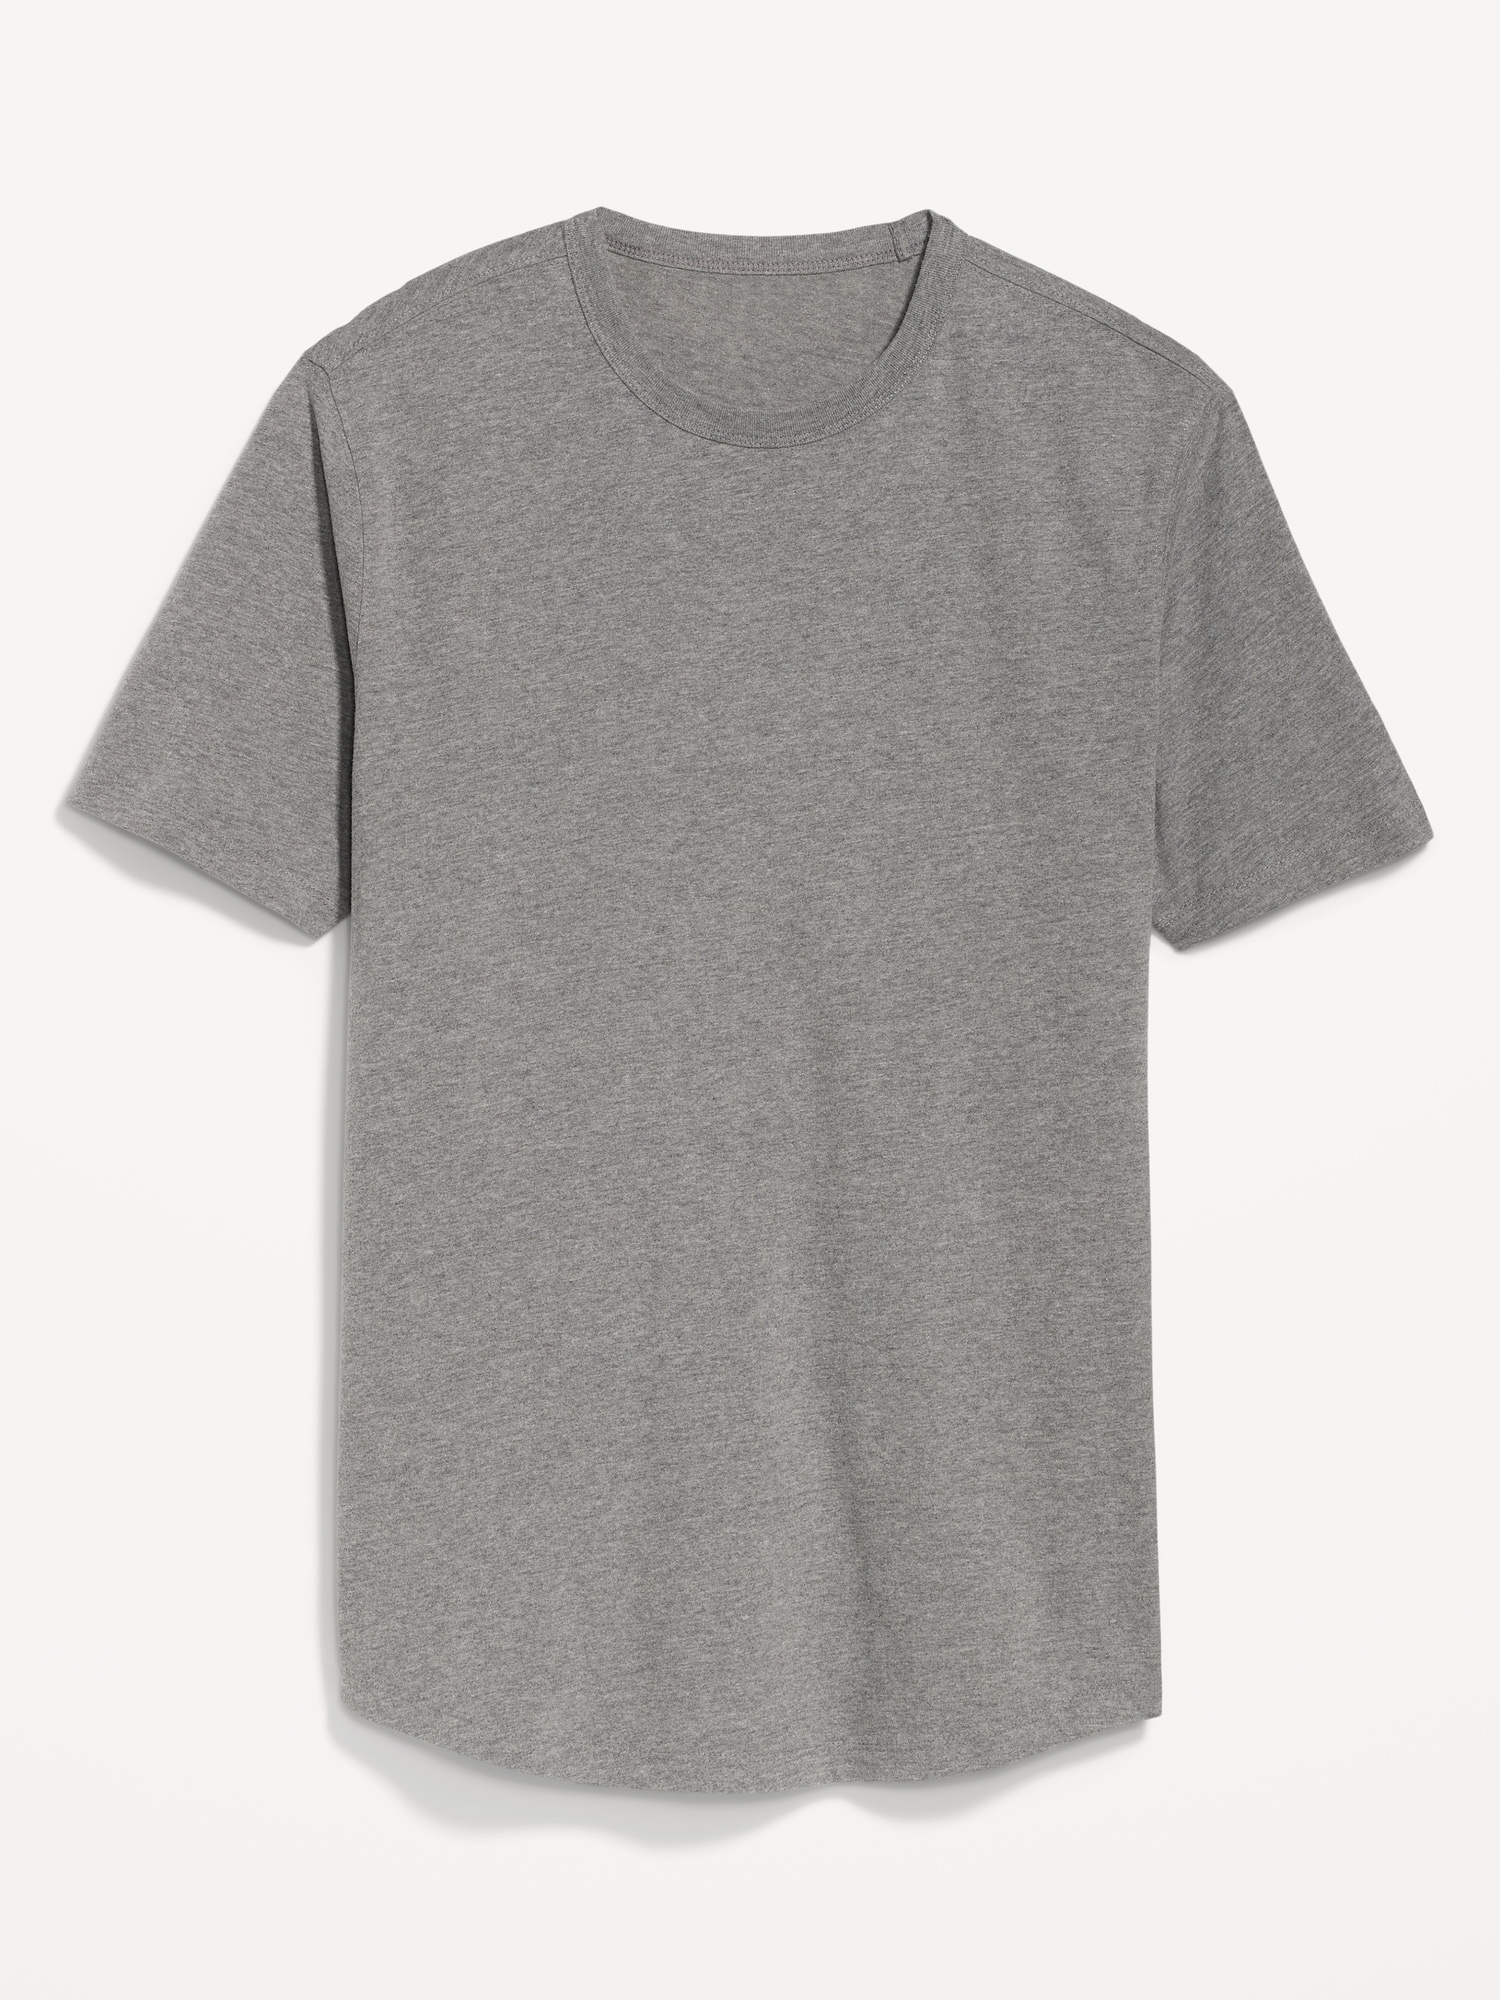 Soft-Washed Curved-Hem T-Shirt